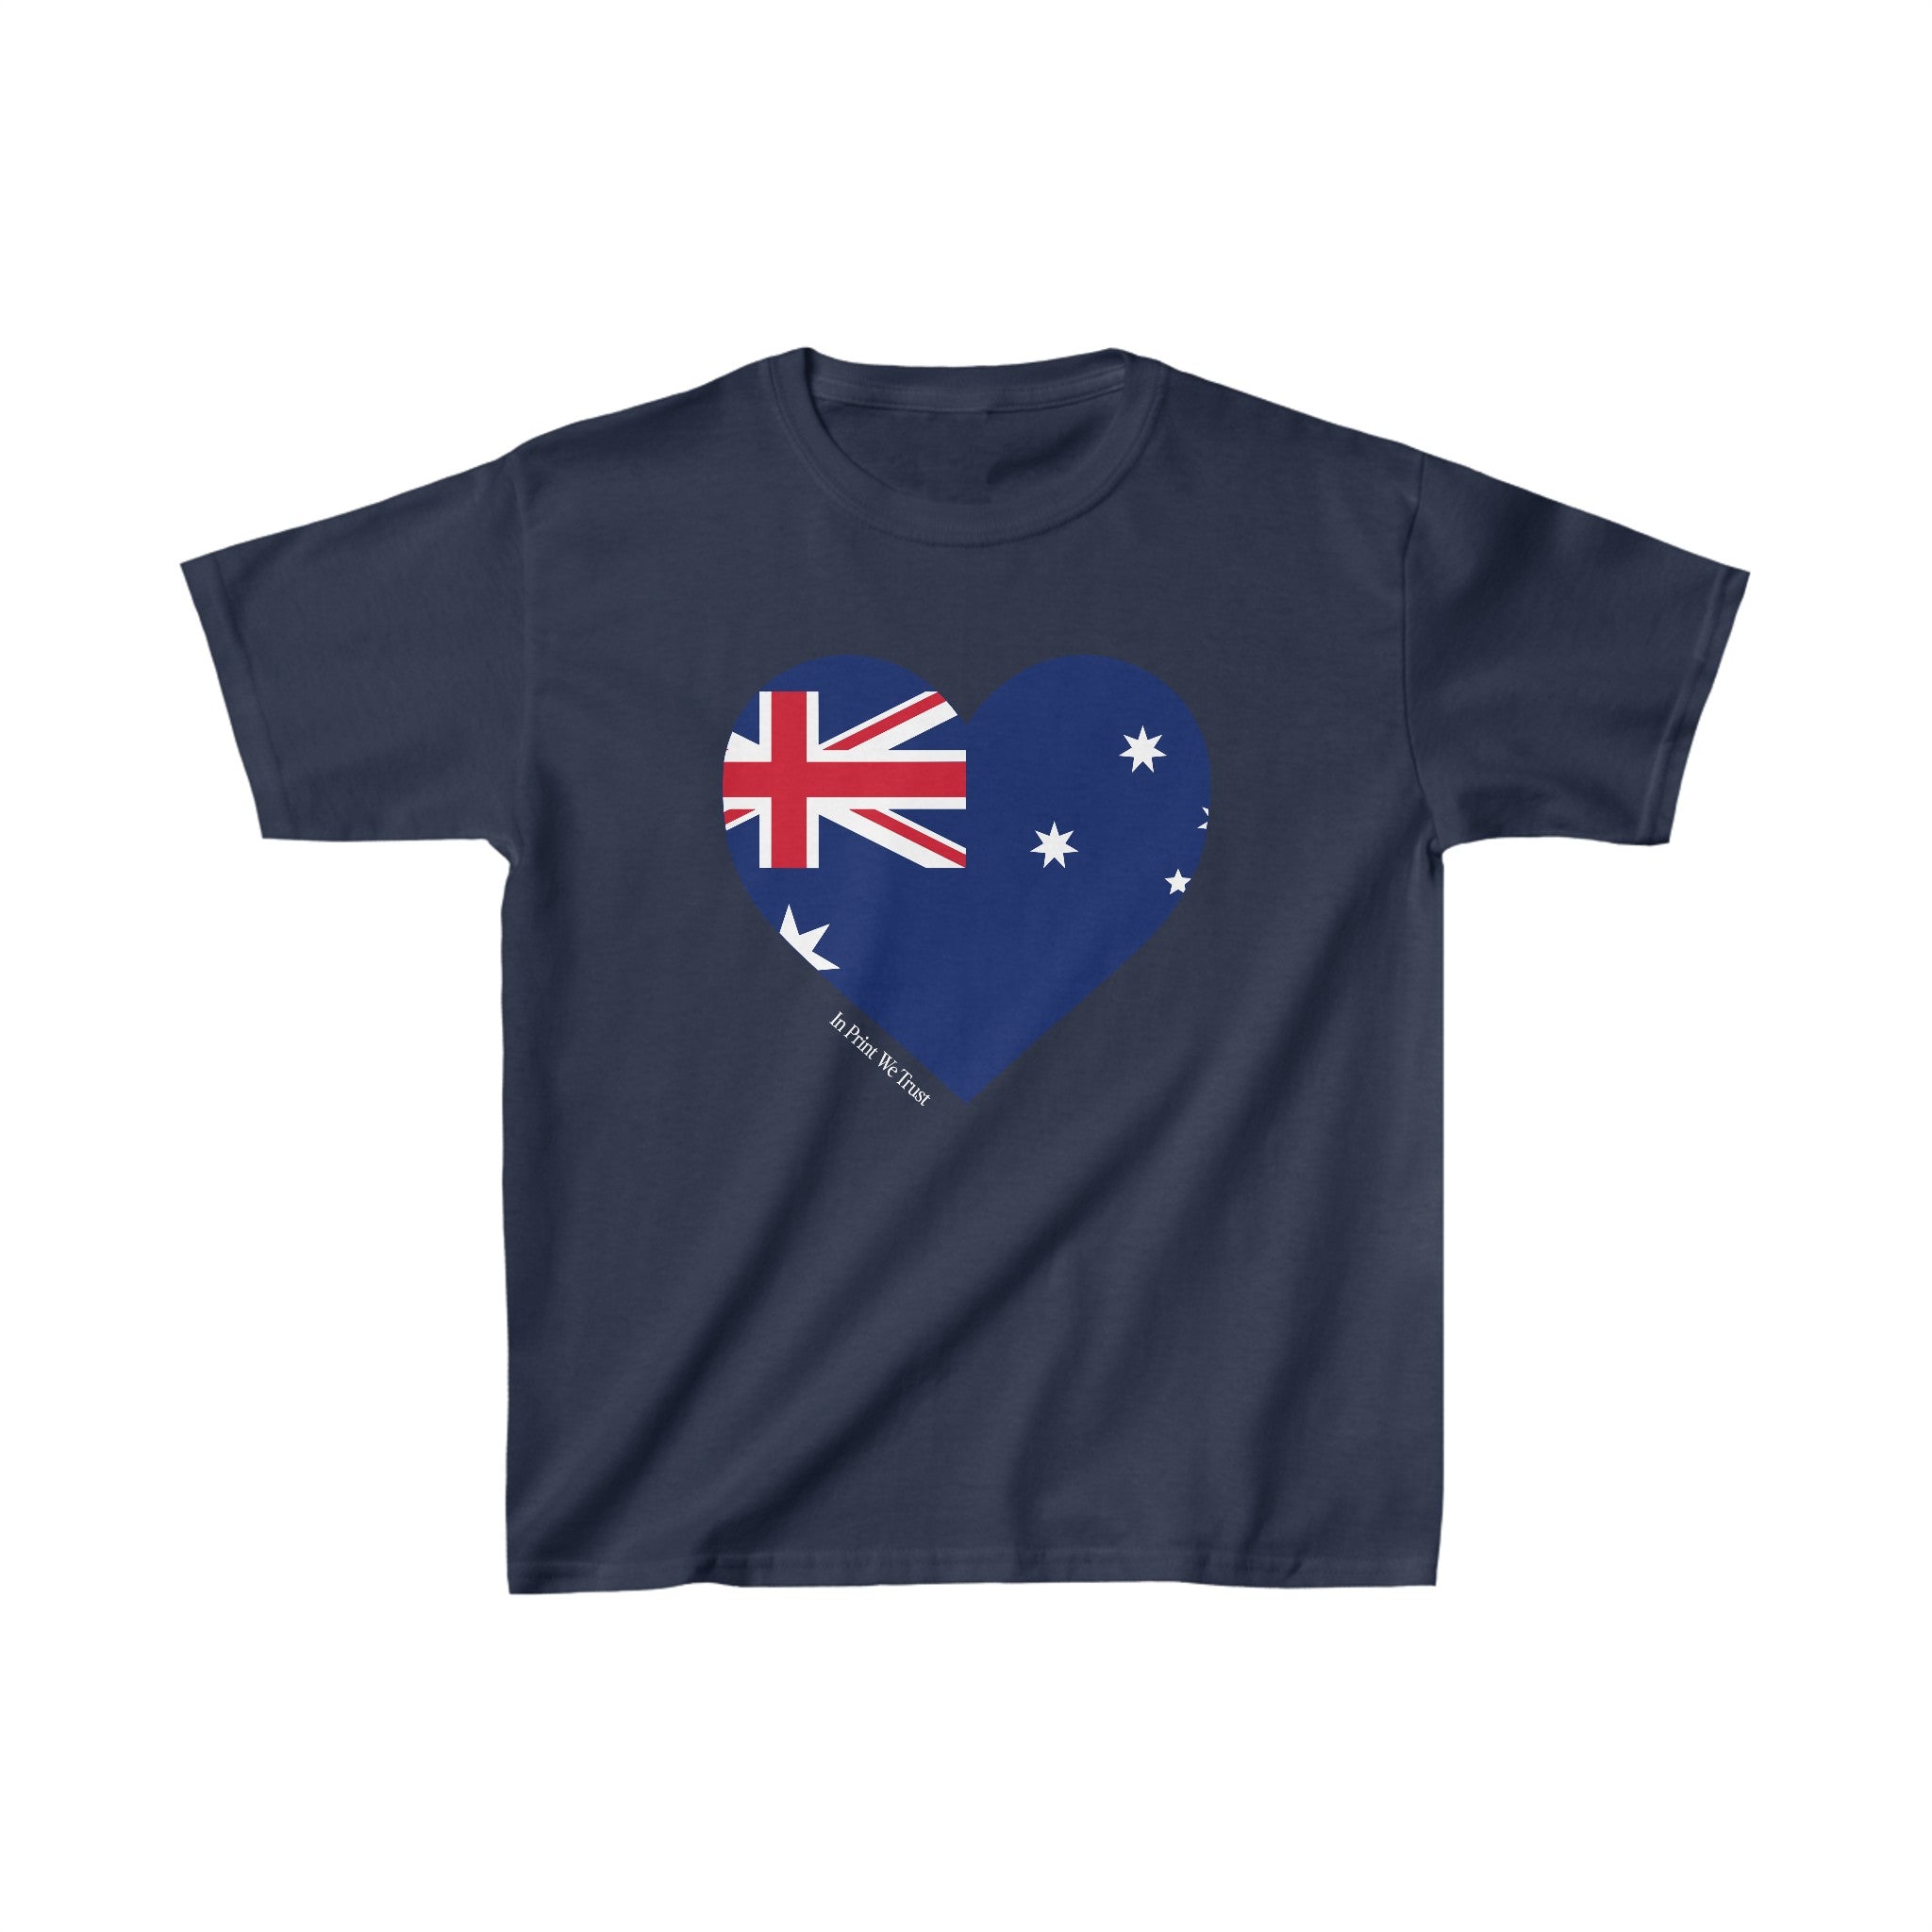 'Australia' baby tee - In Print We Trust